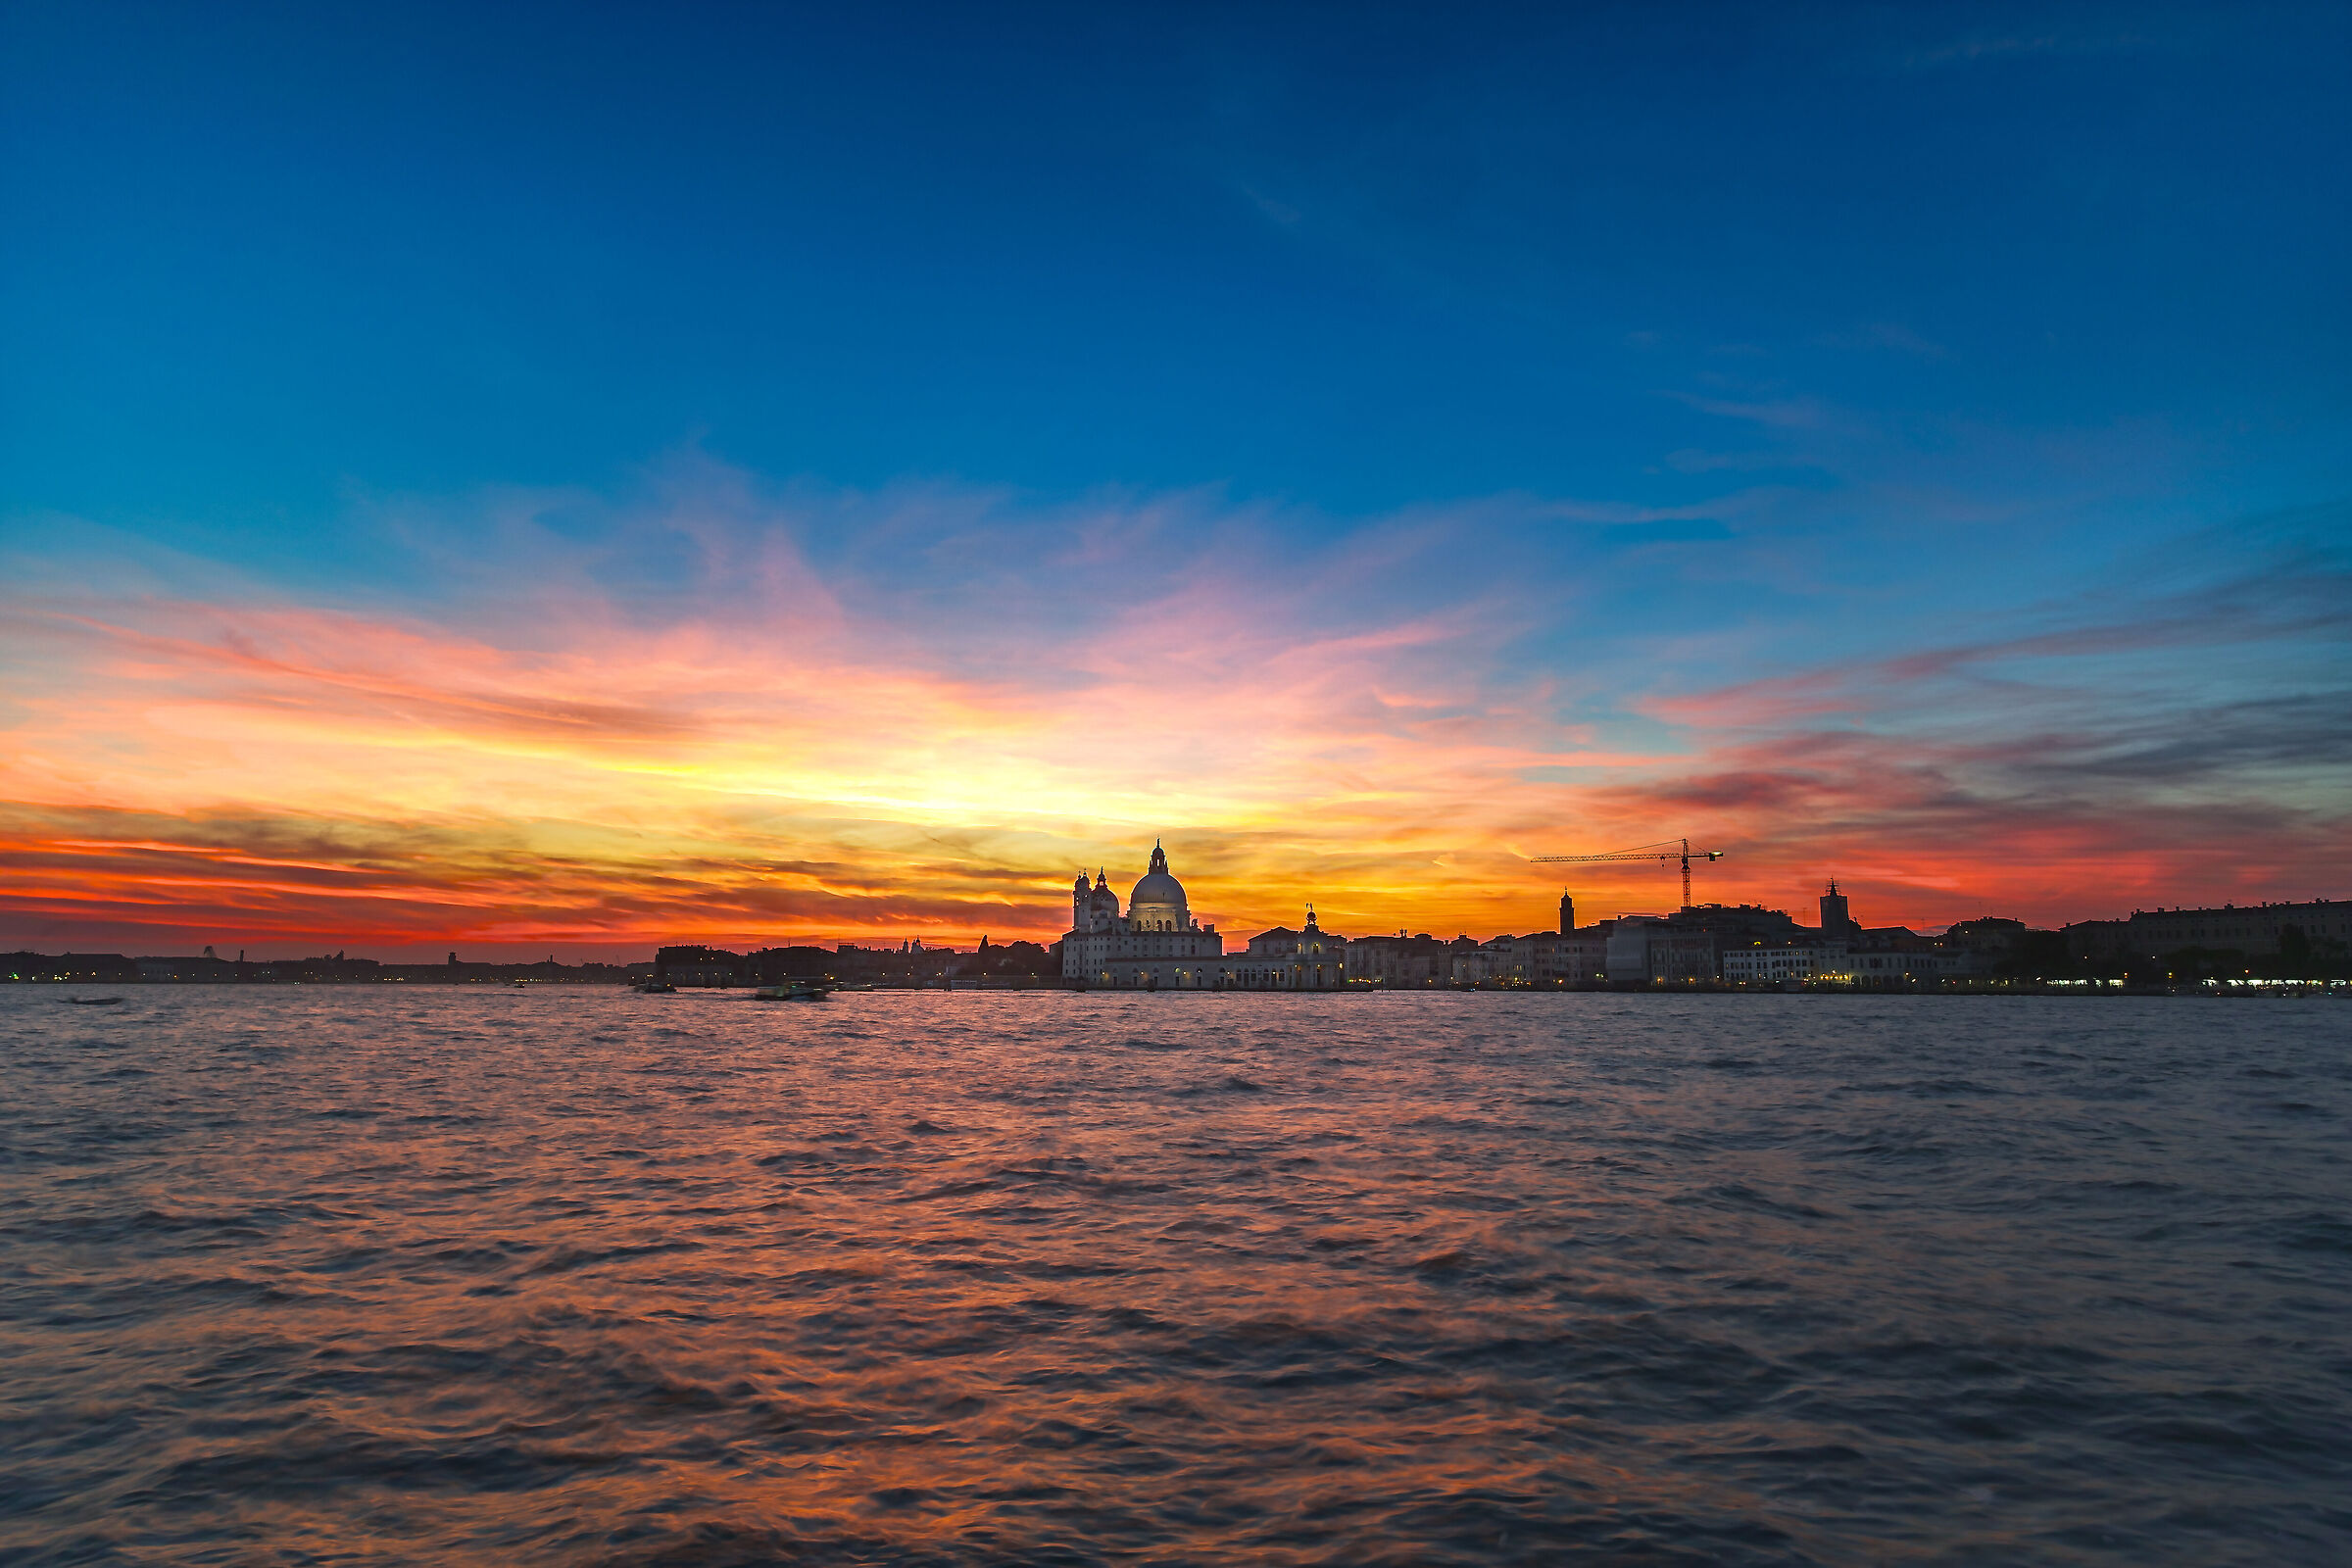 Venice at sunset...